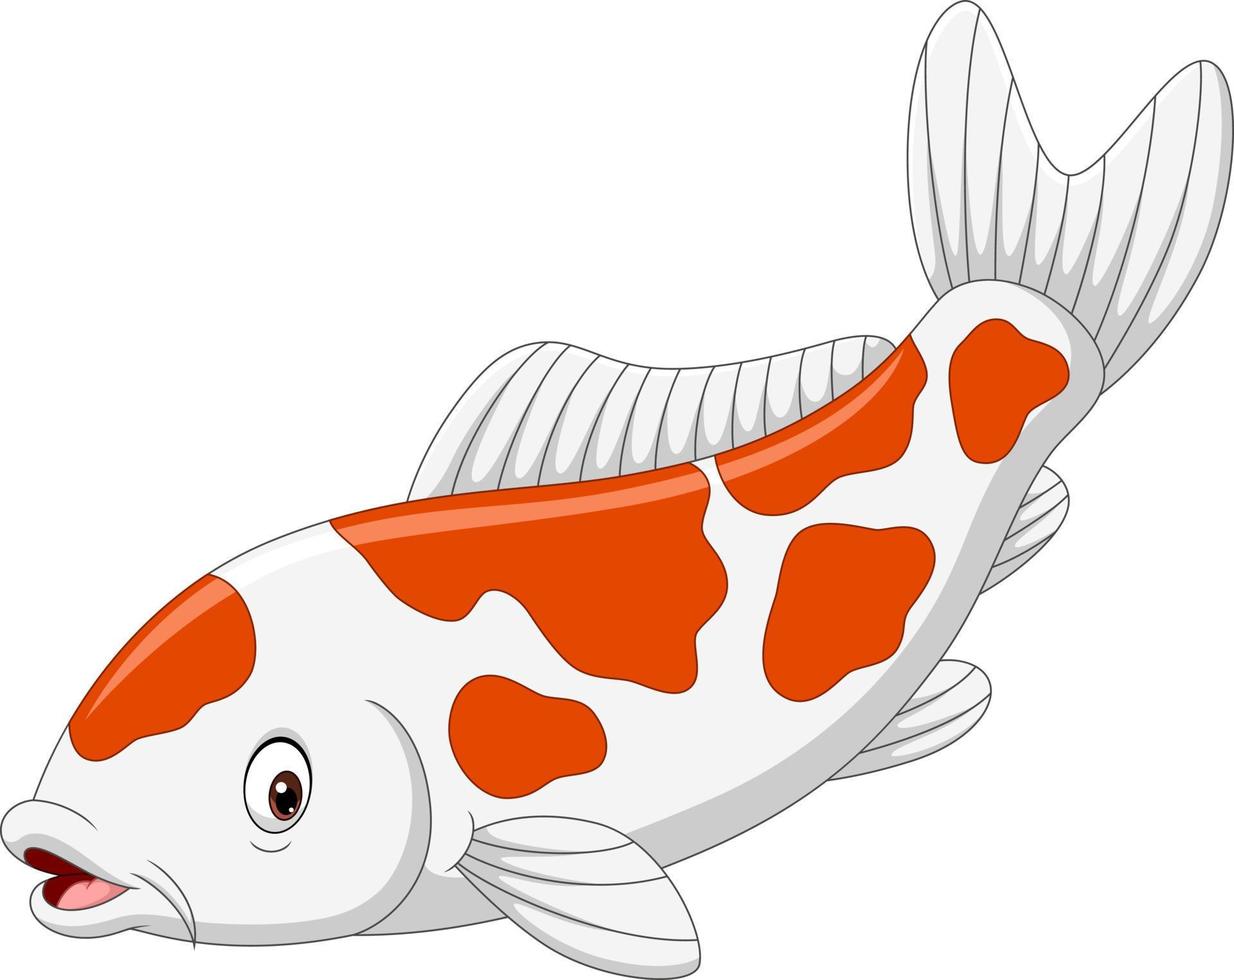 Cartoon koi fish on white background vector